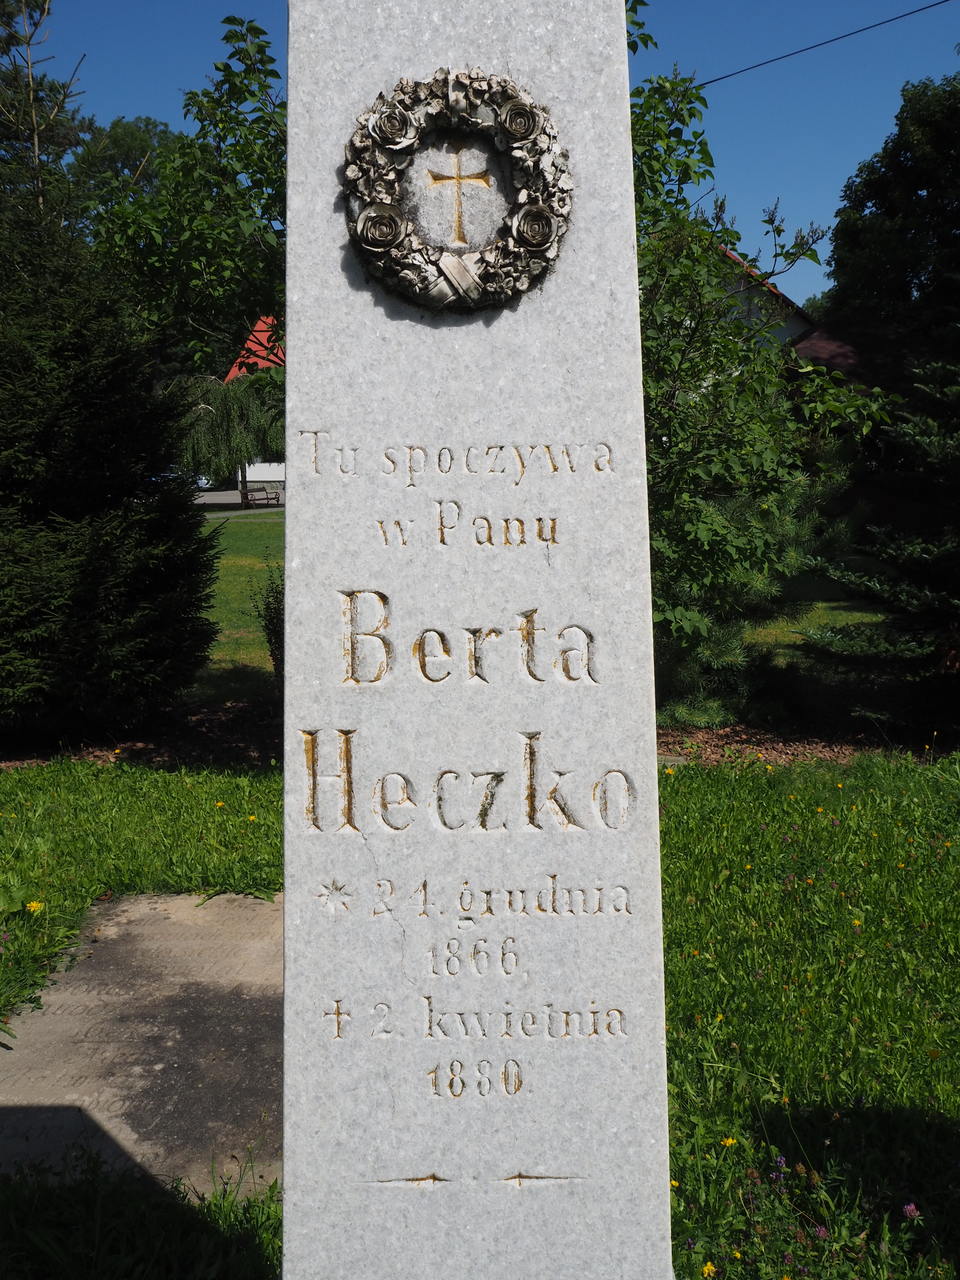 Fragment of a tombstone of Berta Heczko, cemetery in Ligotka Kameralna, state from 2022